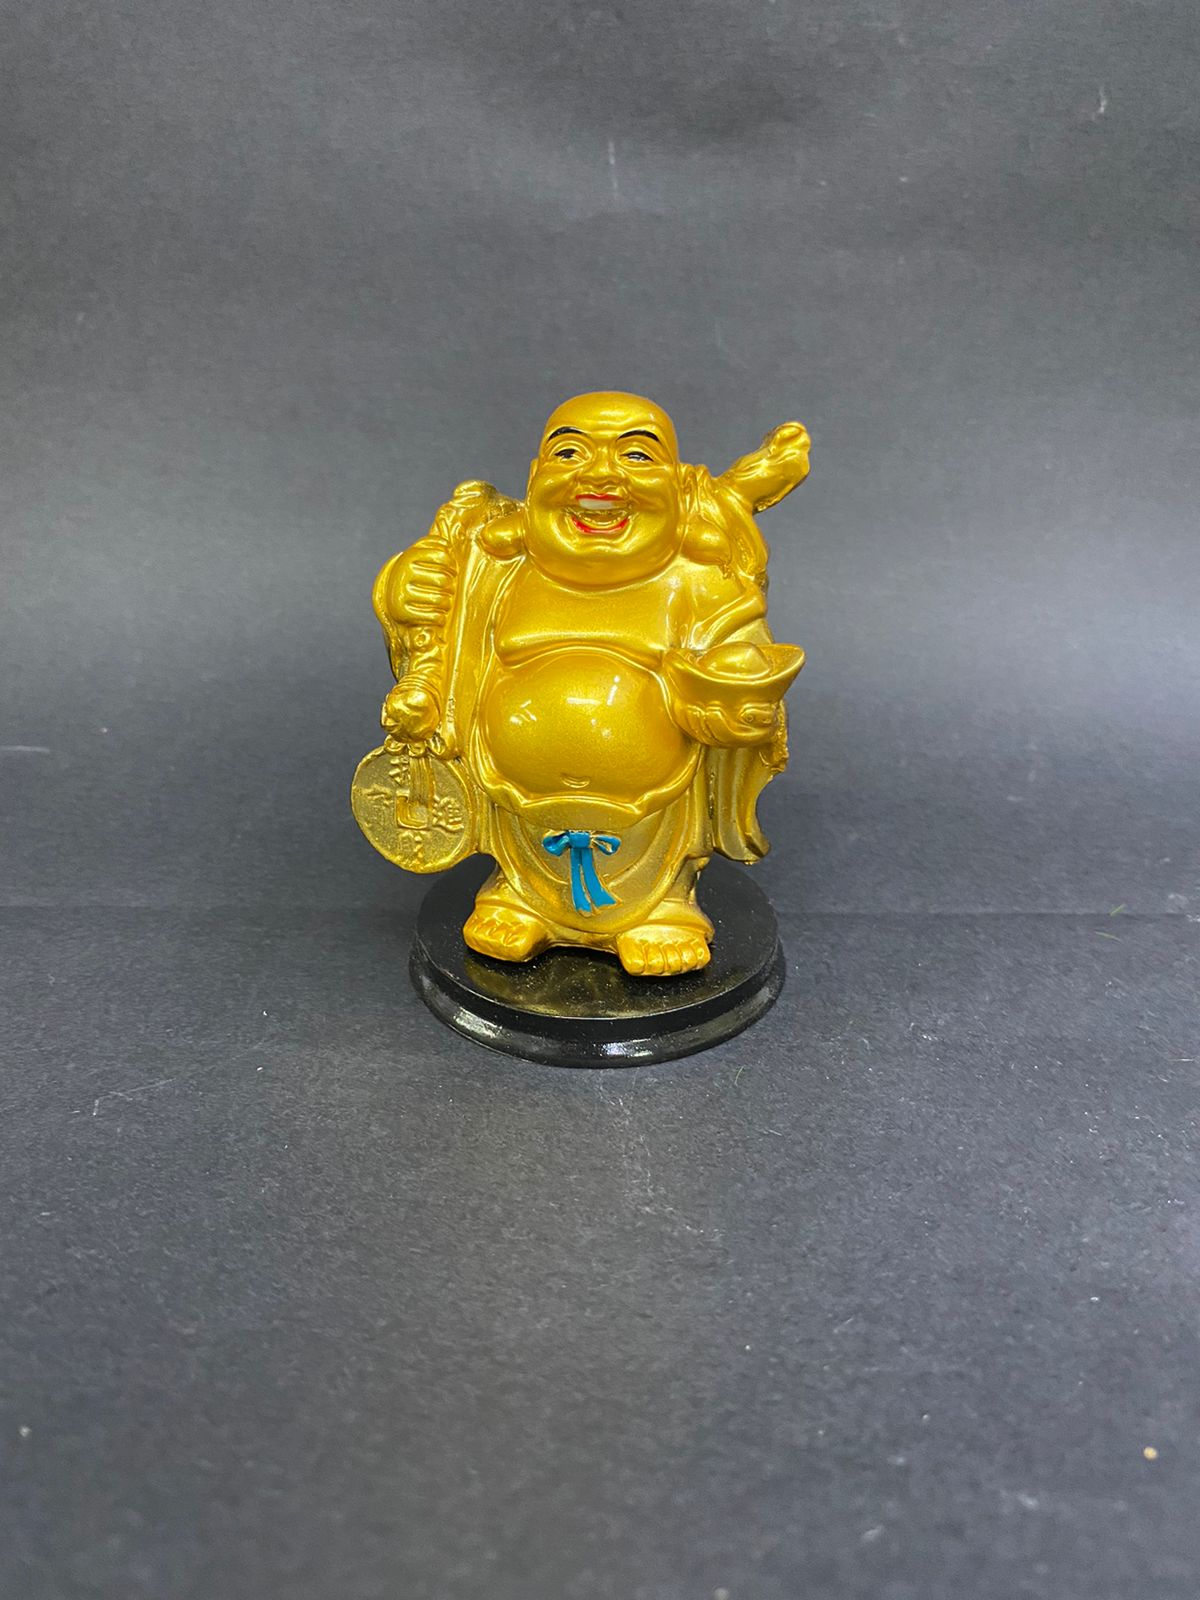 Laughing Buddha Golden Shades In Various Designs Gifting's Form Tamrapatra